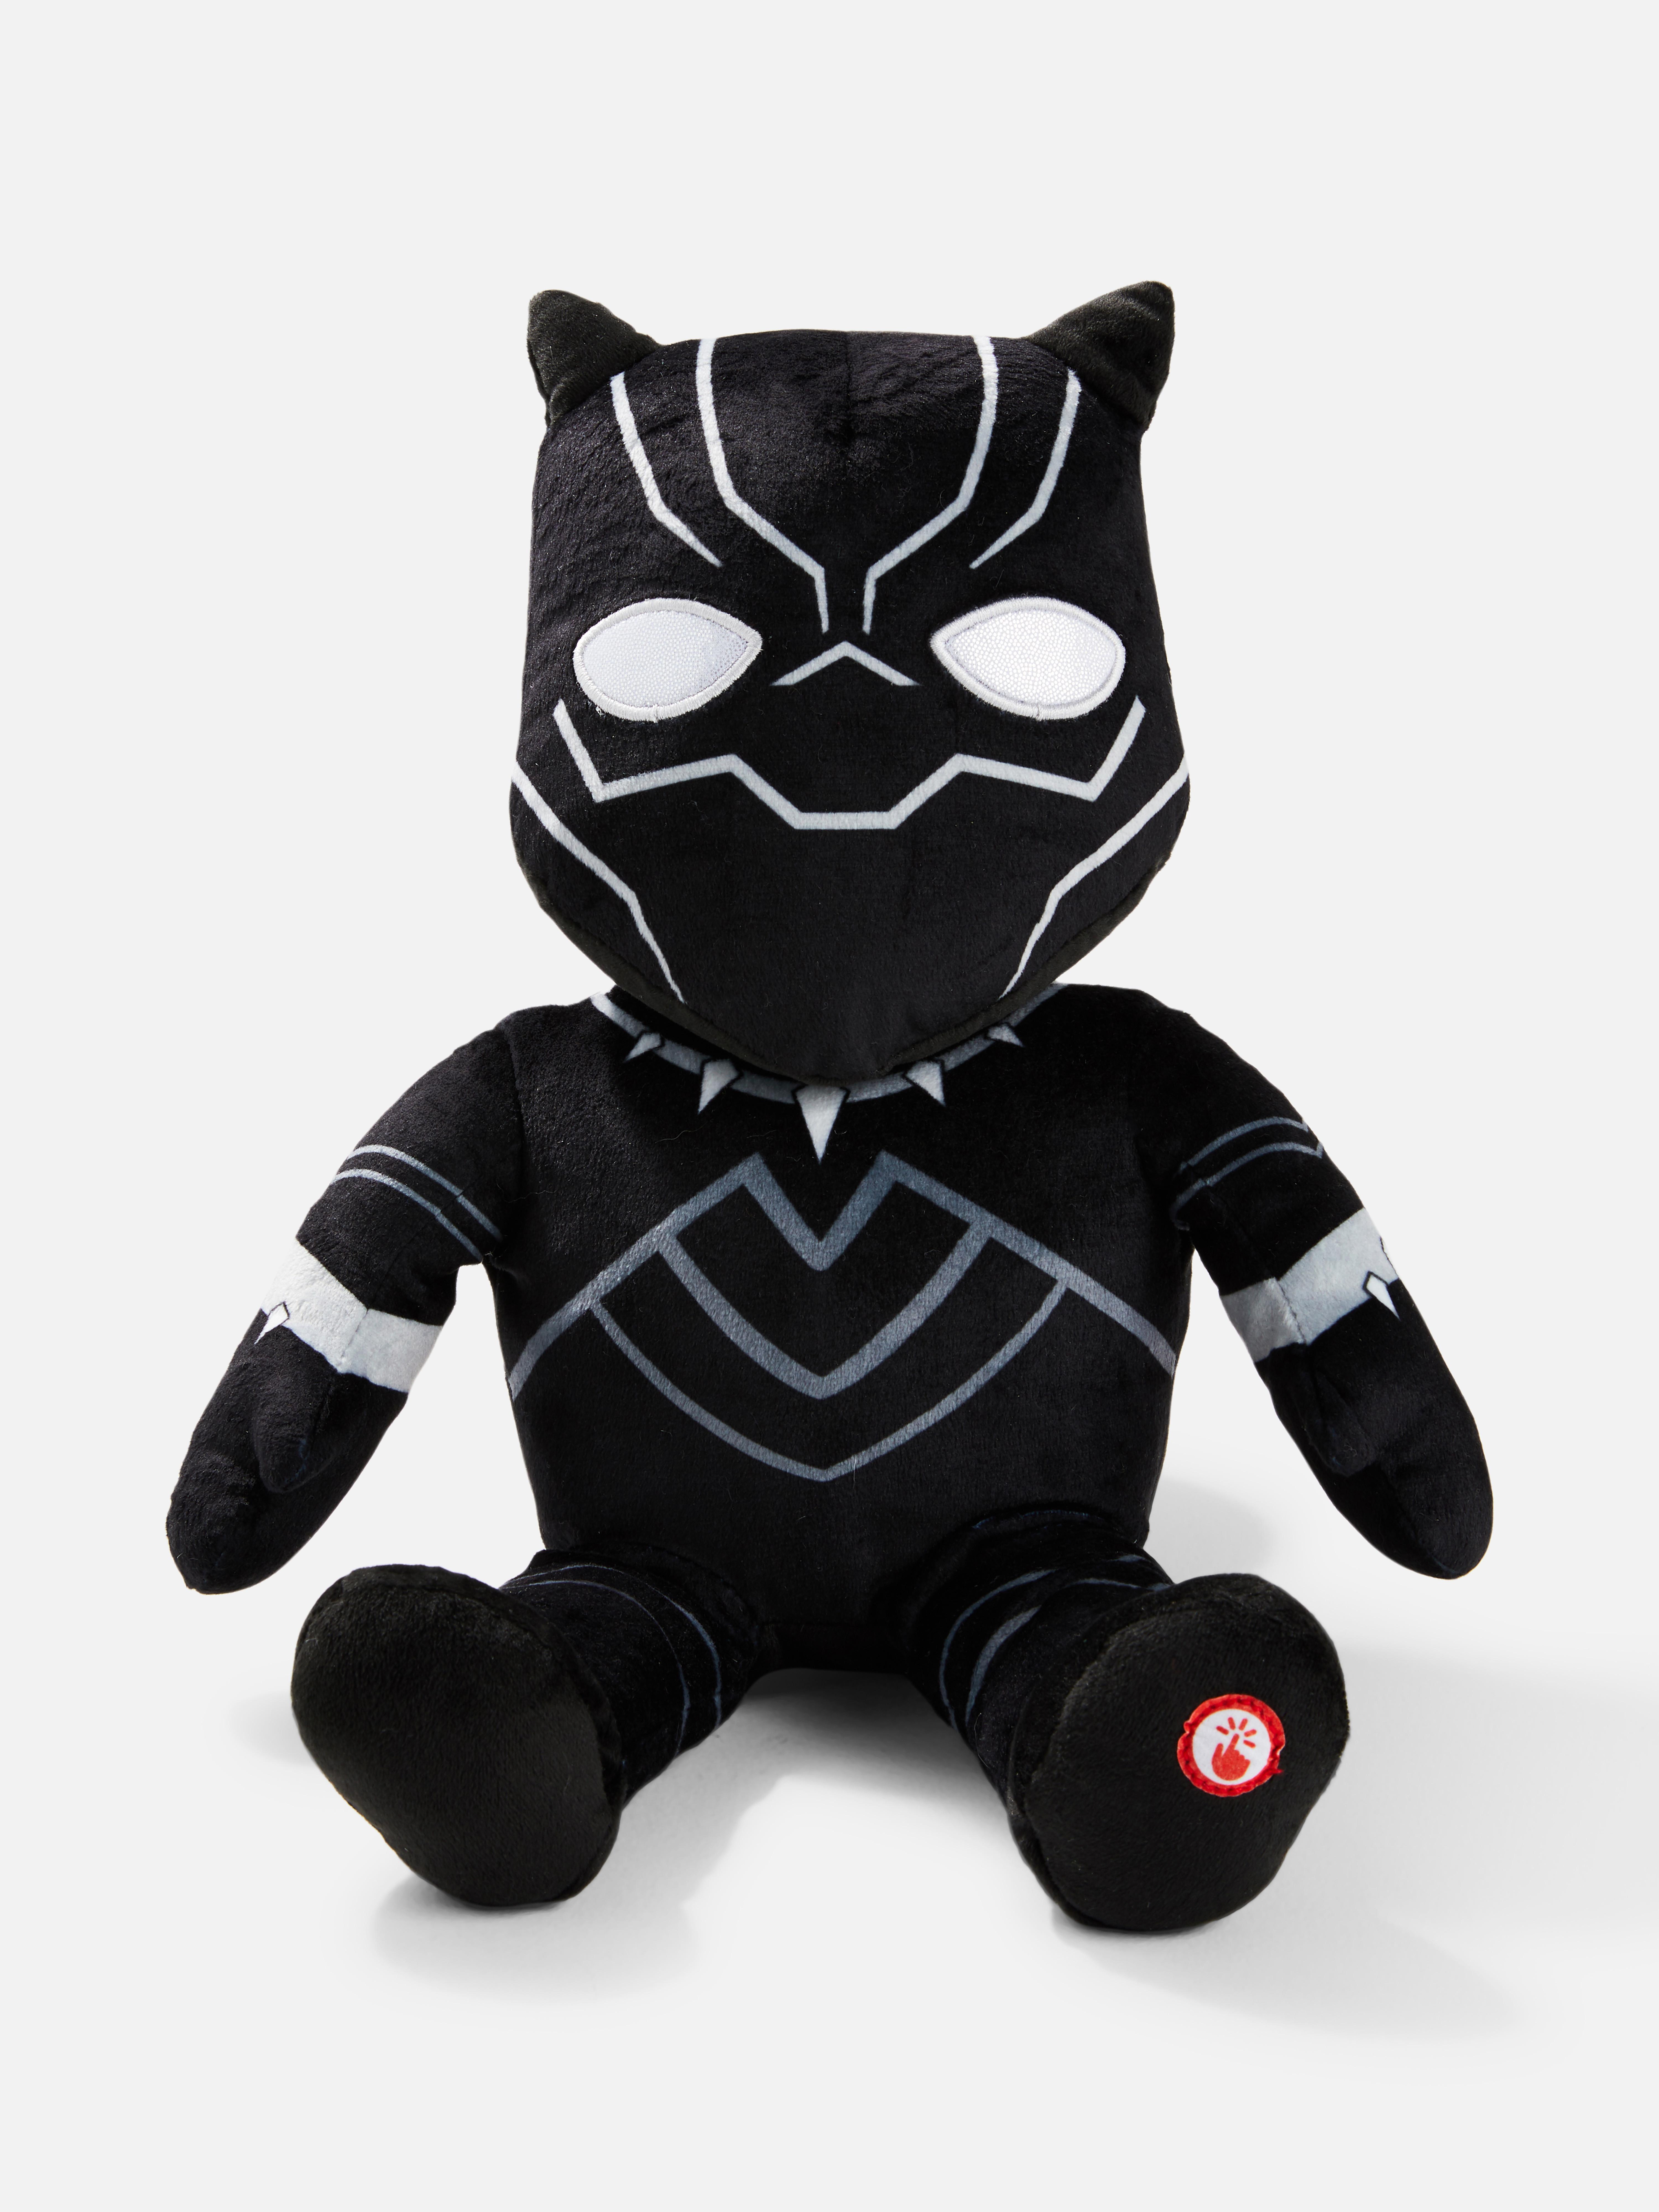 Marvel Black Panther Large Plush Toy Black